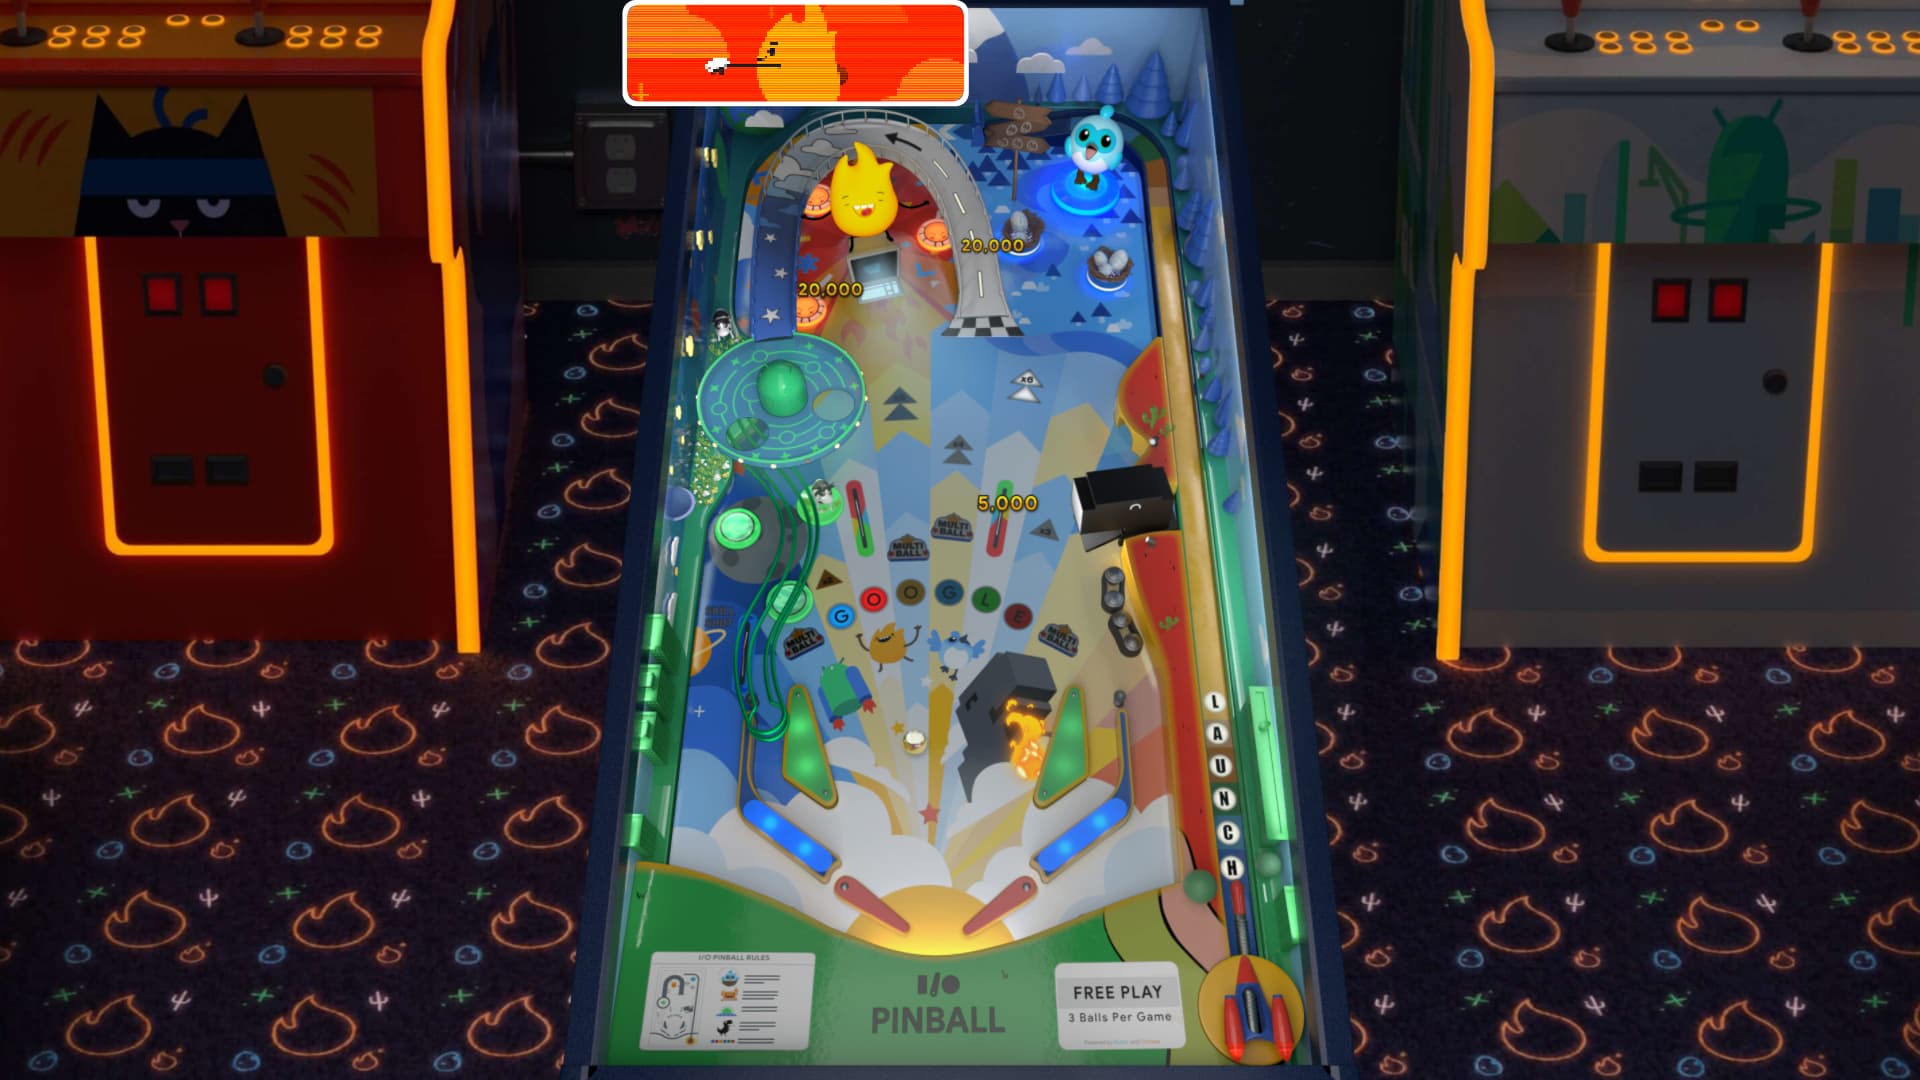 Free I/O Pinball game from Google